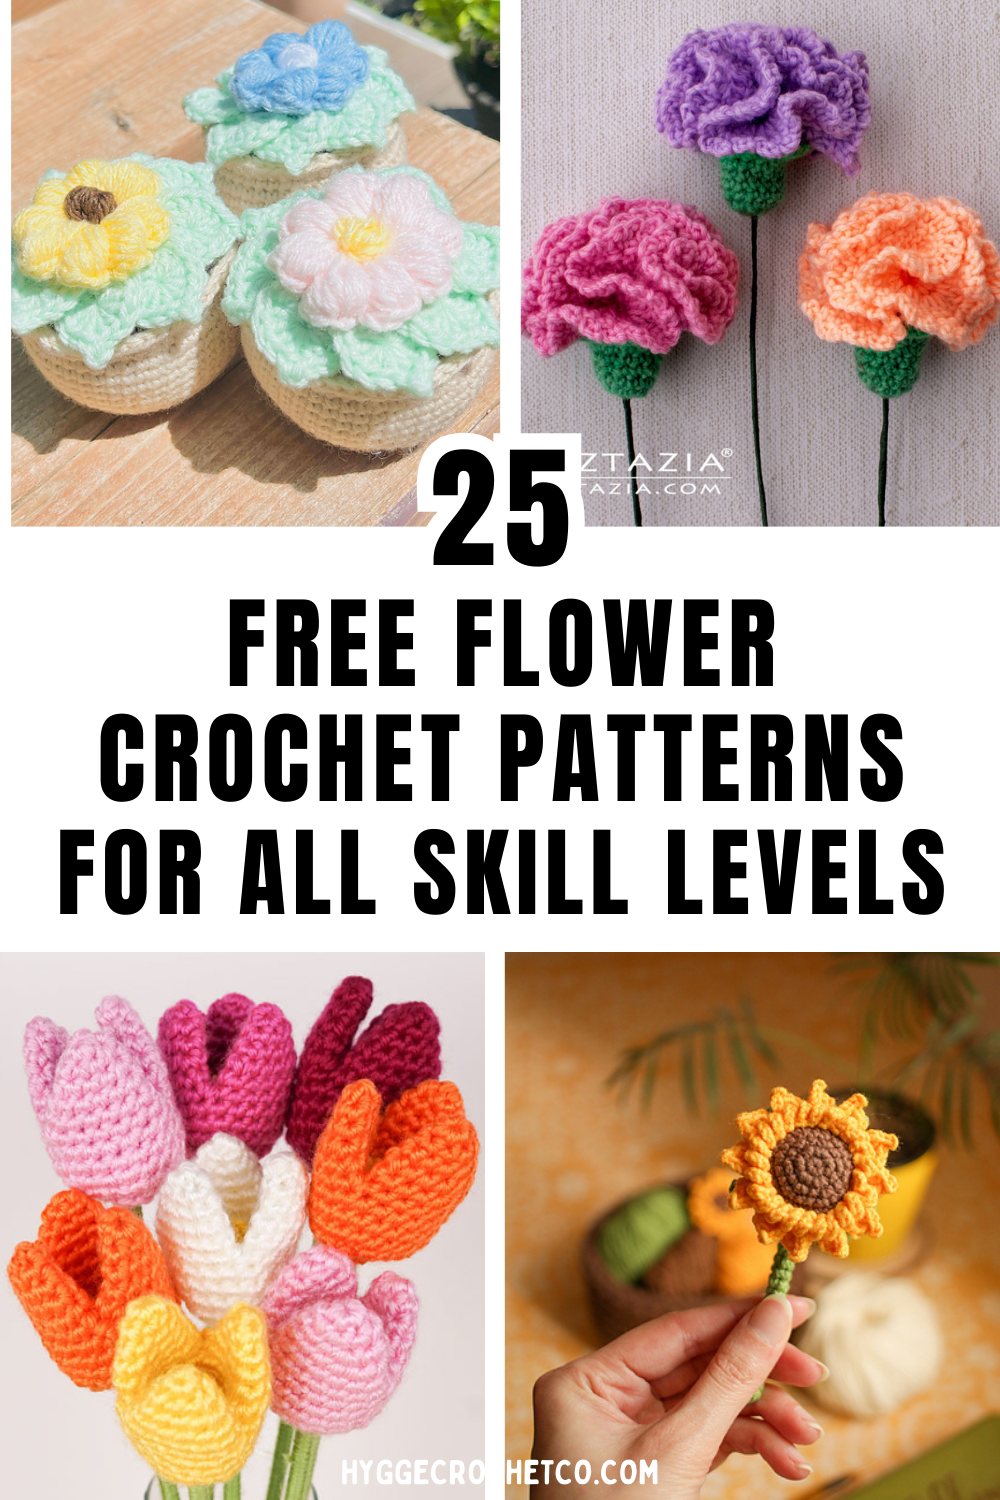 25 Free Crochet Flower Patterns for All Skill Levels